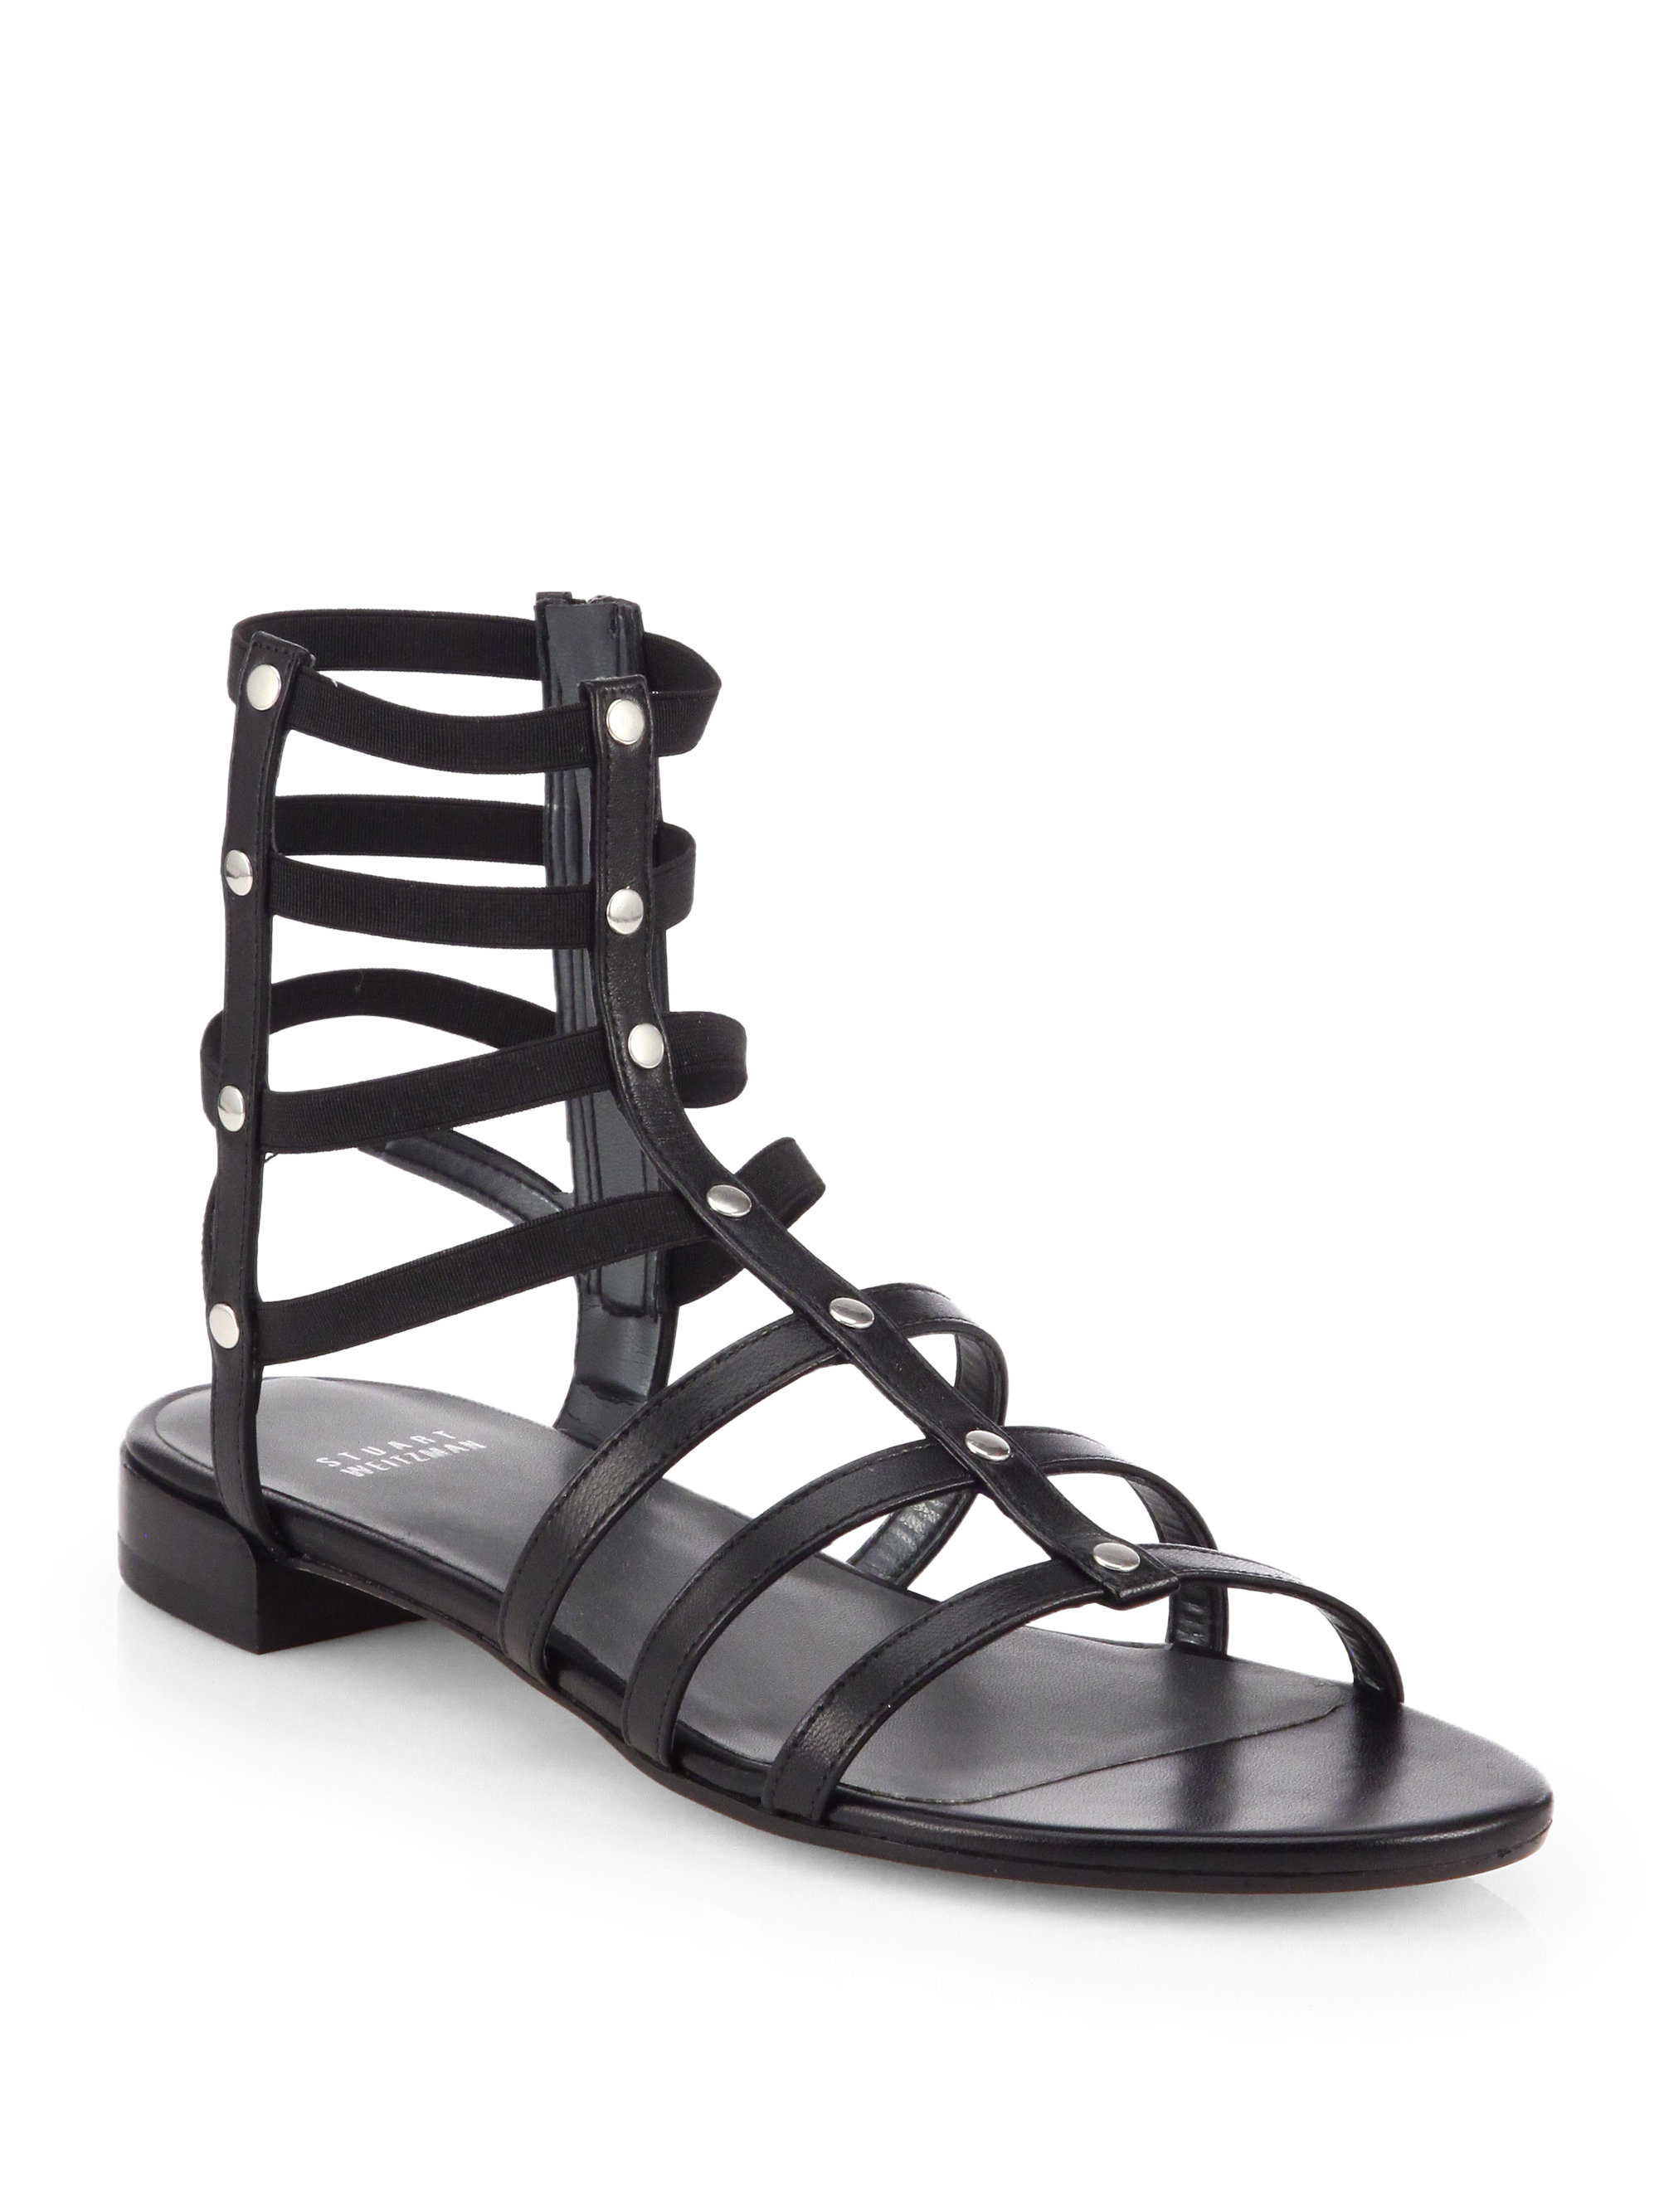 Lyst - Stuart Weitzman Caesar Leather Gladiator Sandals in Black